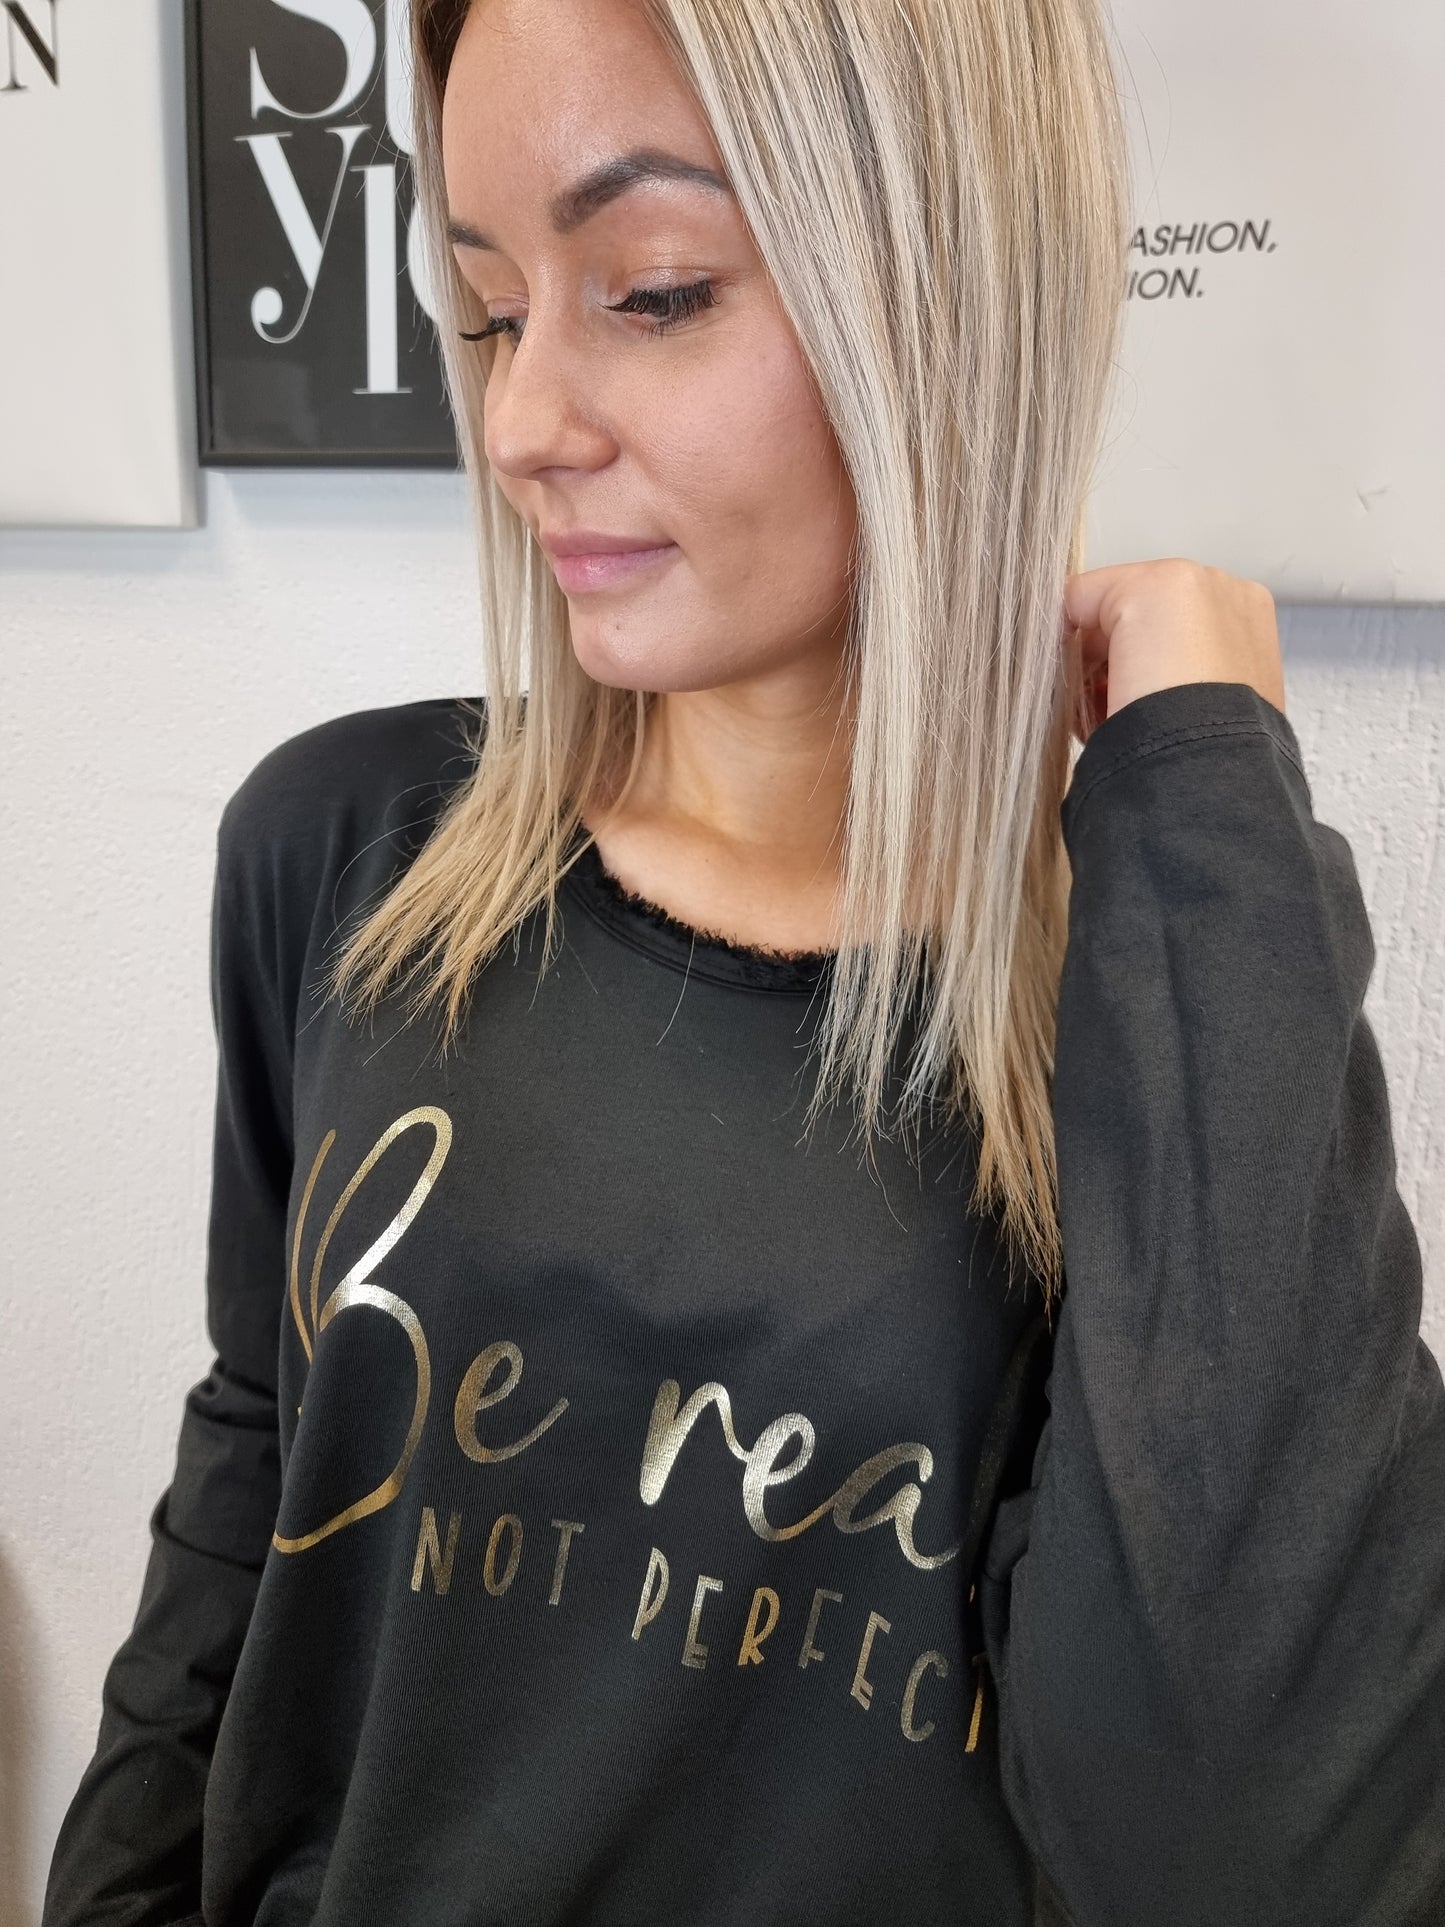 Langarmshirt mit Fransen und goldenem Schriftzug " Be real not Perfekt" in verschiedenen Farben